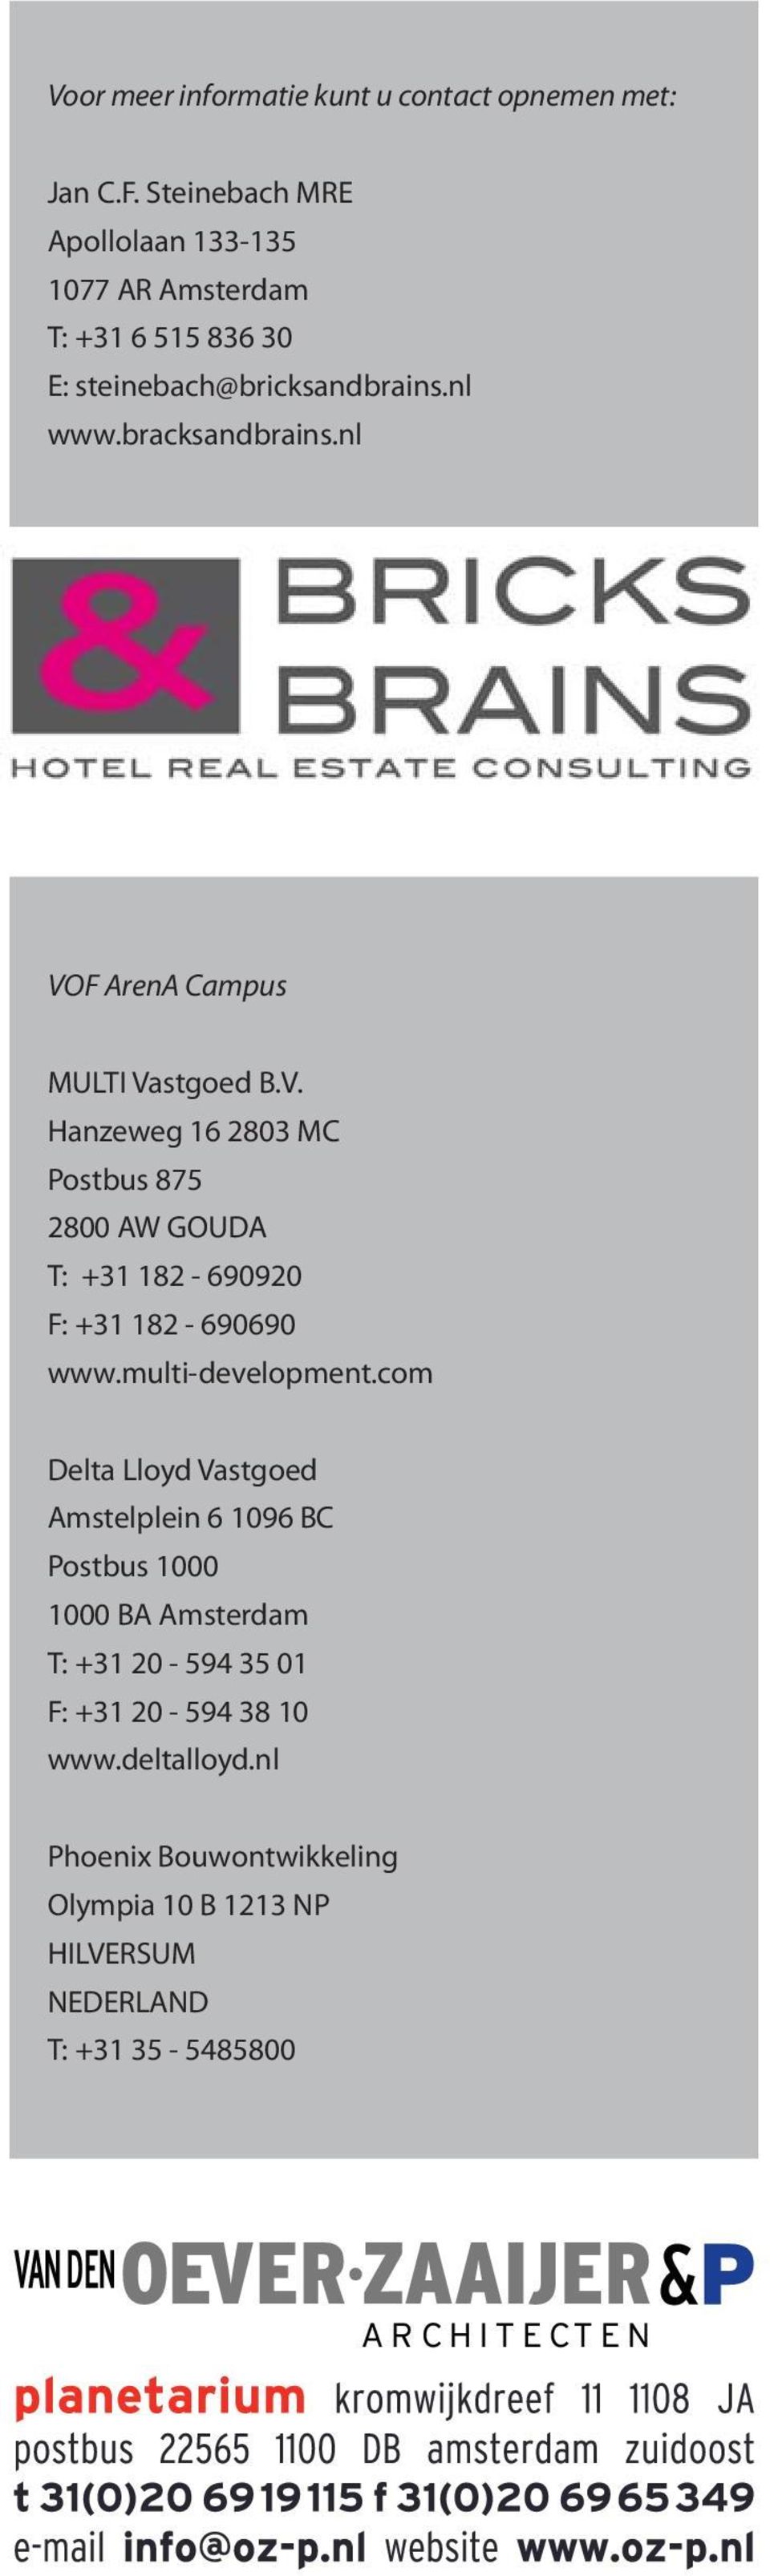 nl VOF ArenA Campus MULTI Vastgoed B.V. Hanzeweg 16 803 MC Postbus 875 800 AW GOUDA T: +31 18-69090 F: +31 18-690690 www.